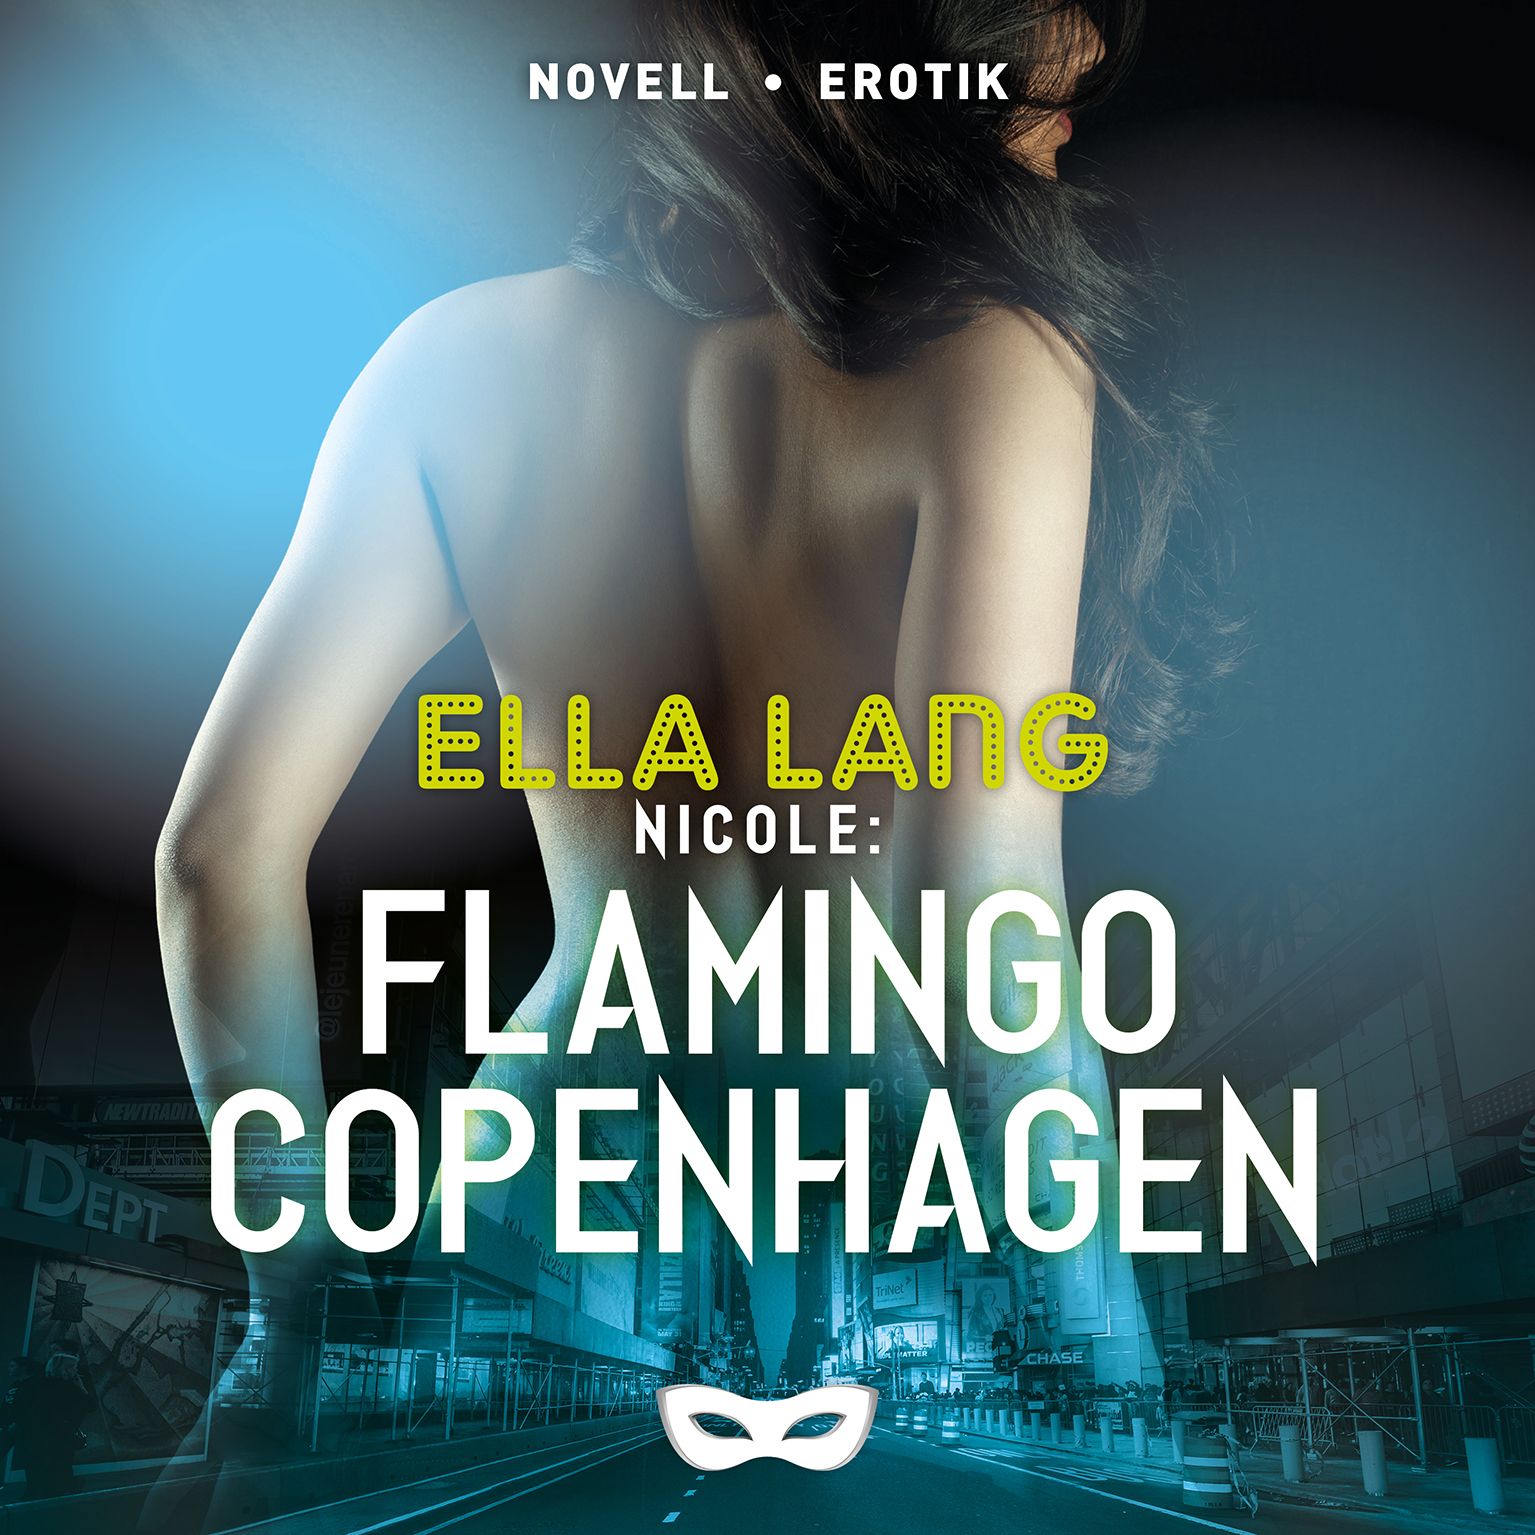 Nicole: Flamingo Copenhagen, ljudbok av Ella Lang